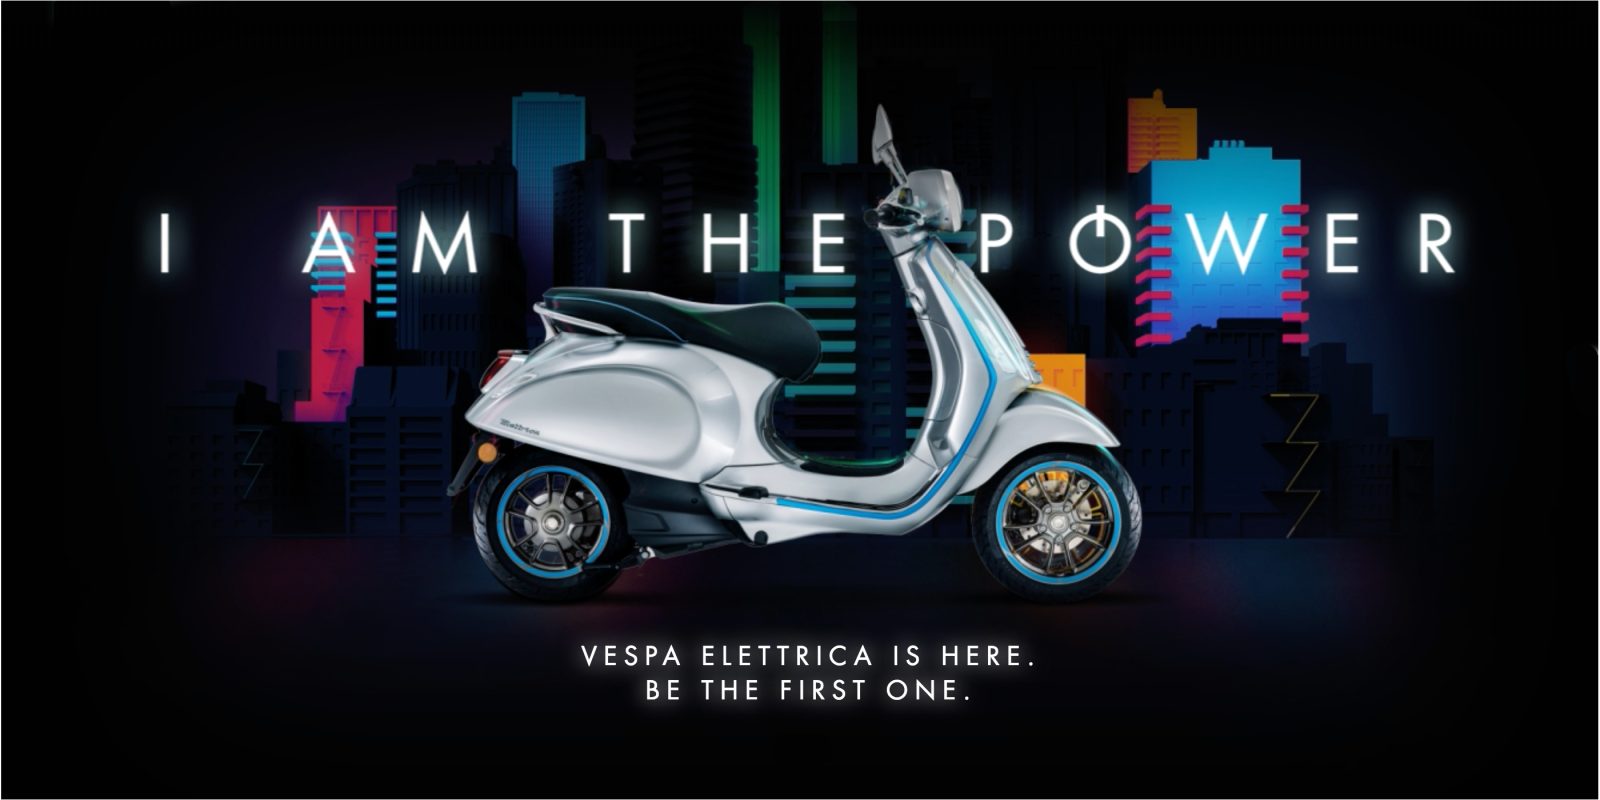 Vespa Elettrica Electric Scooter Begins Sales Today In Eu